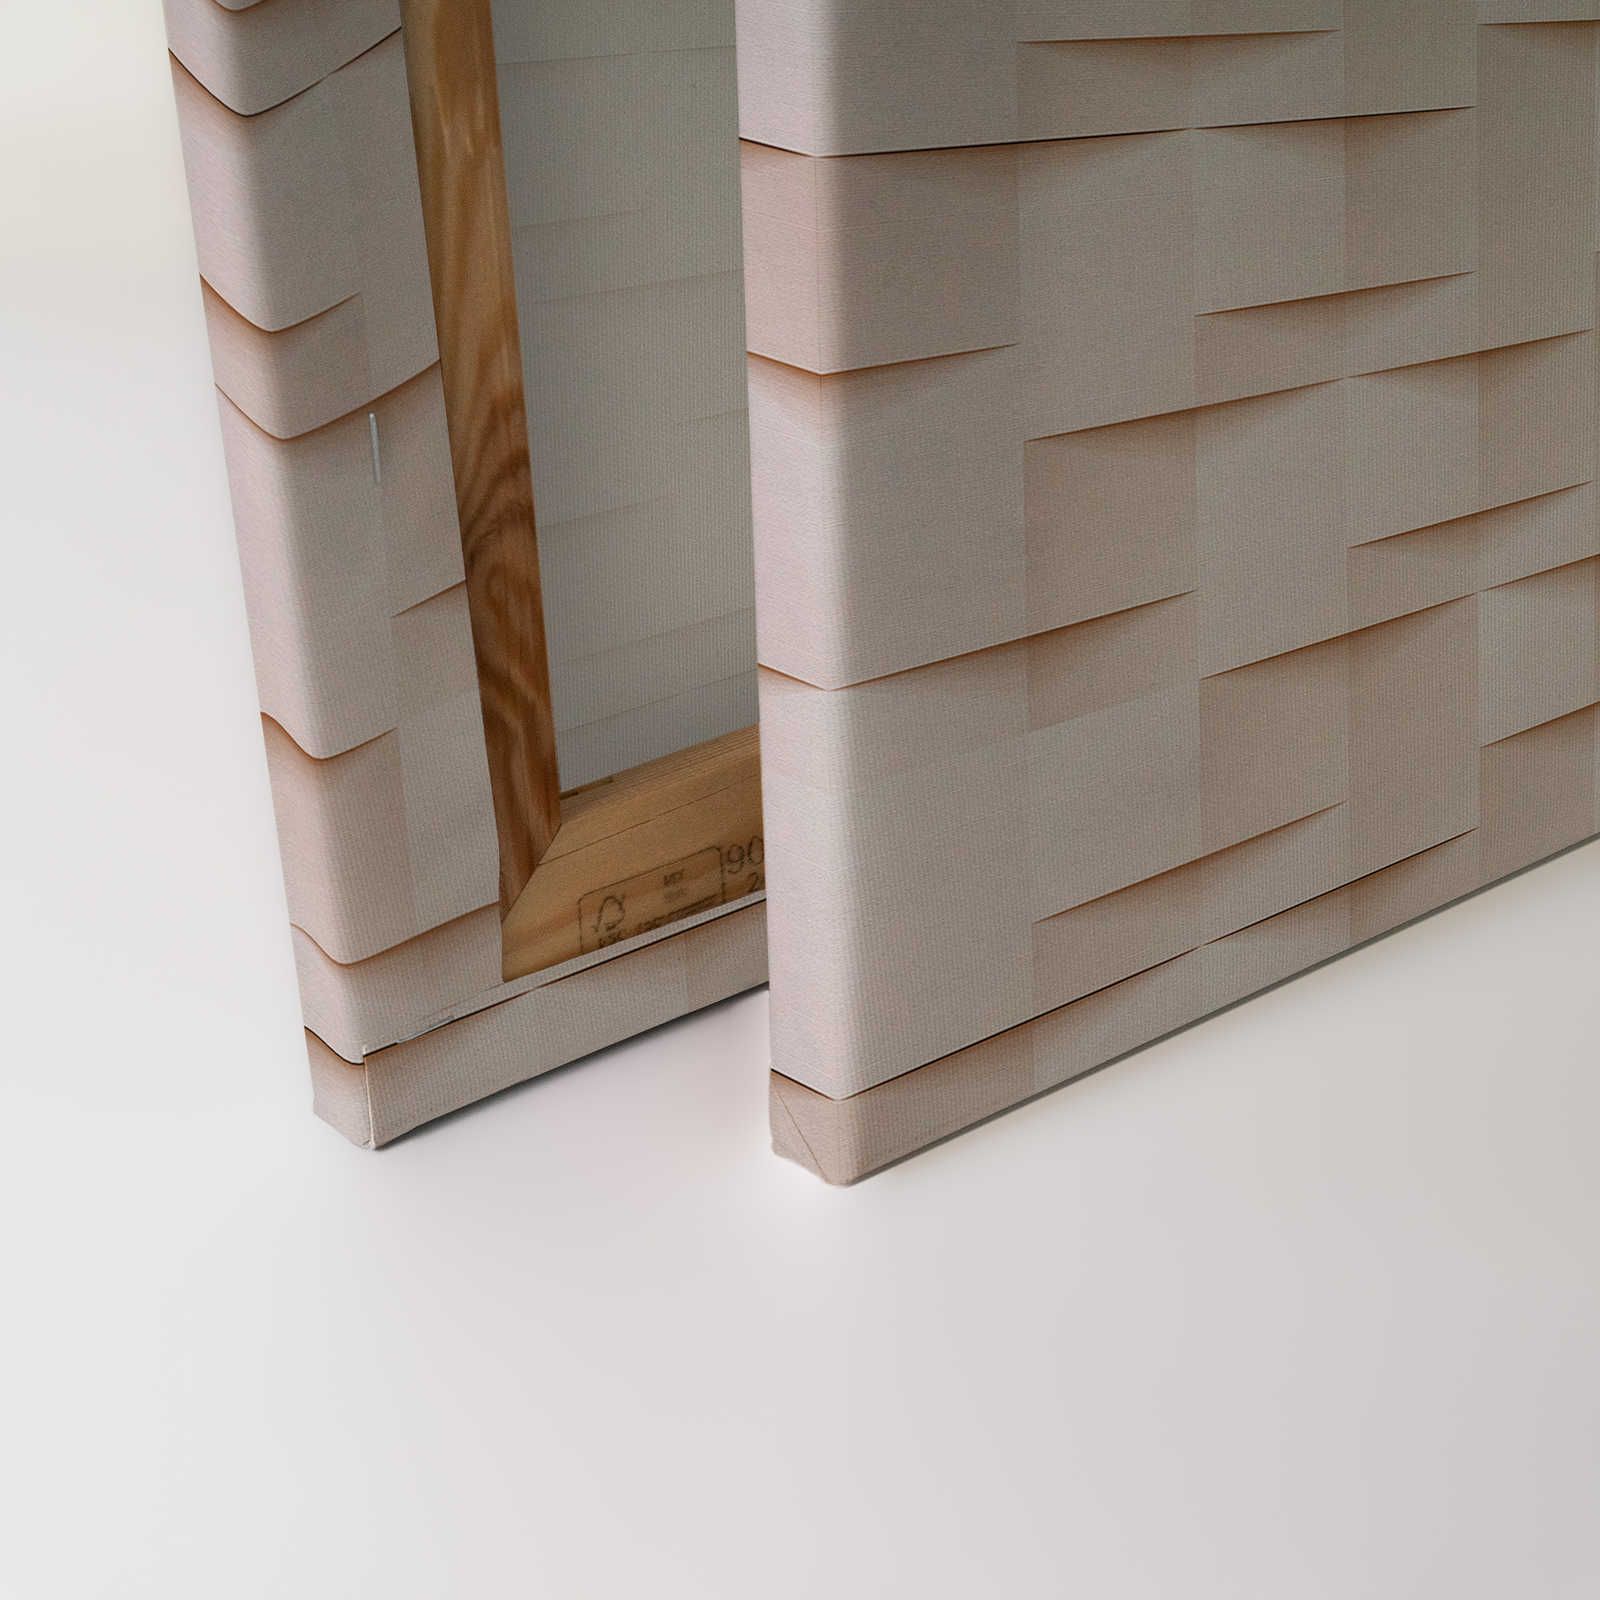             Paper House 1 - Leinwandbild 3D Struktur Papier Origami Falten – 0,90 m x 0,60 m
        